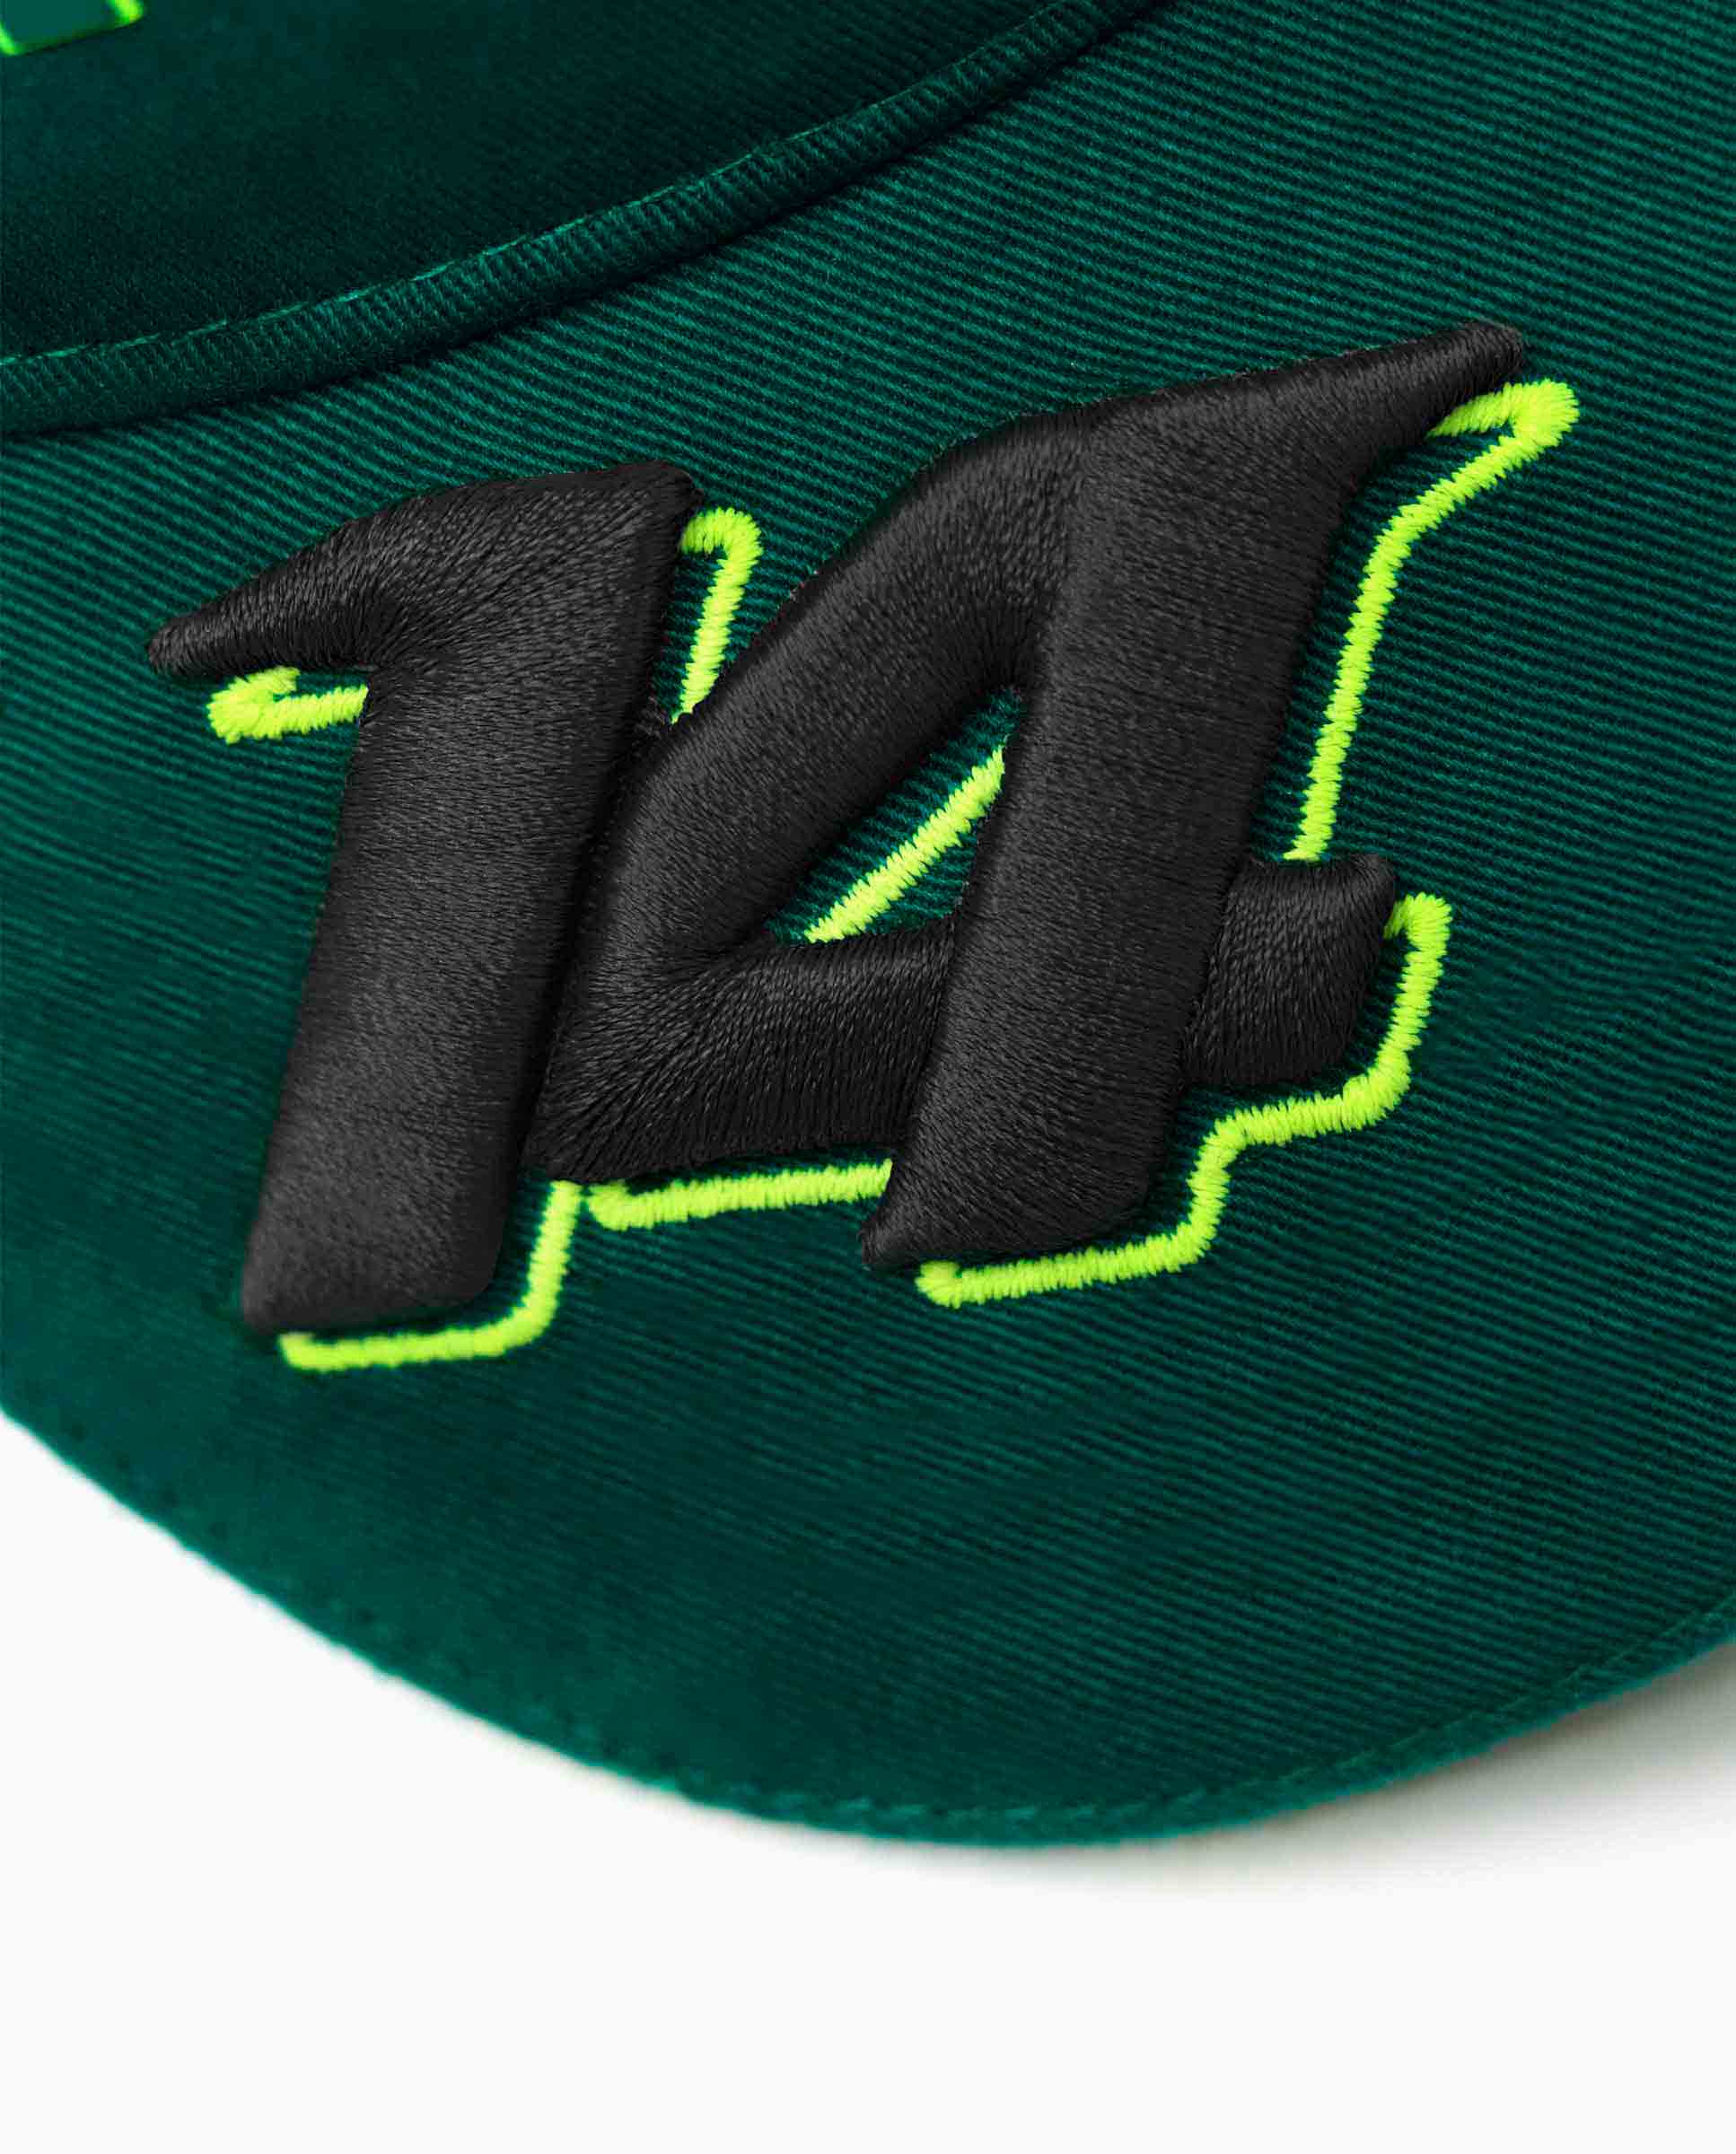 Aston Martin F1 Kimoa Fernando Alonso Lifestyle Hat- Green